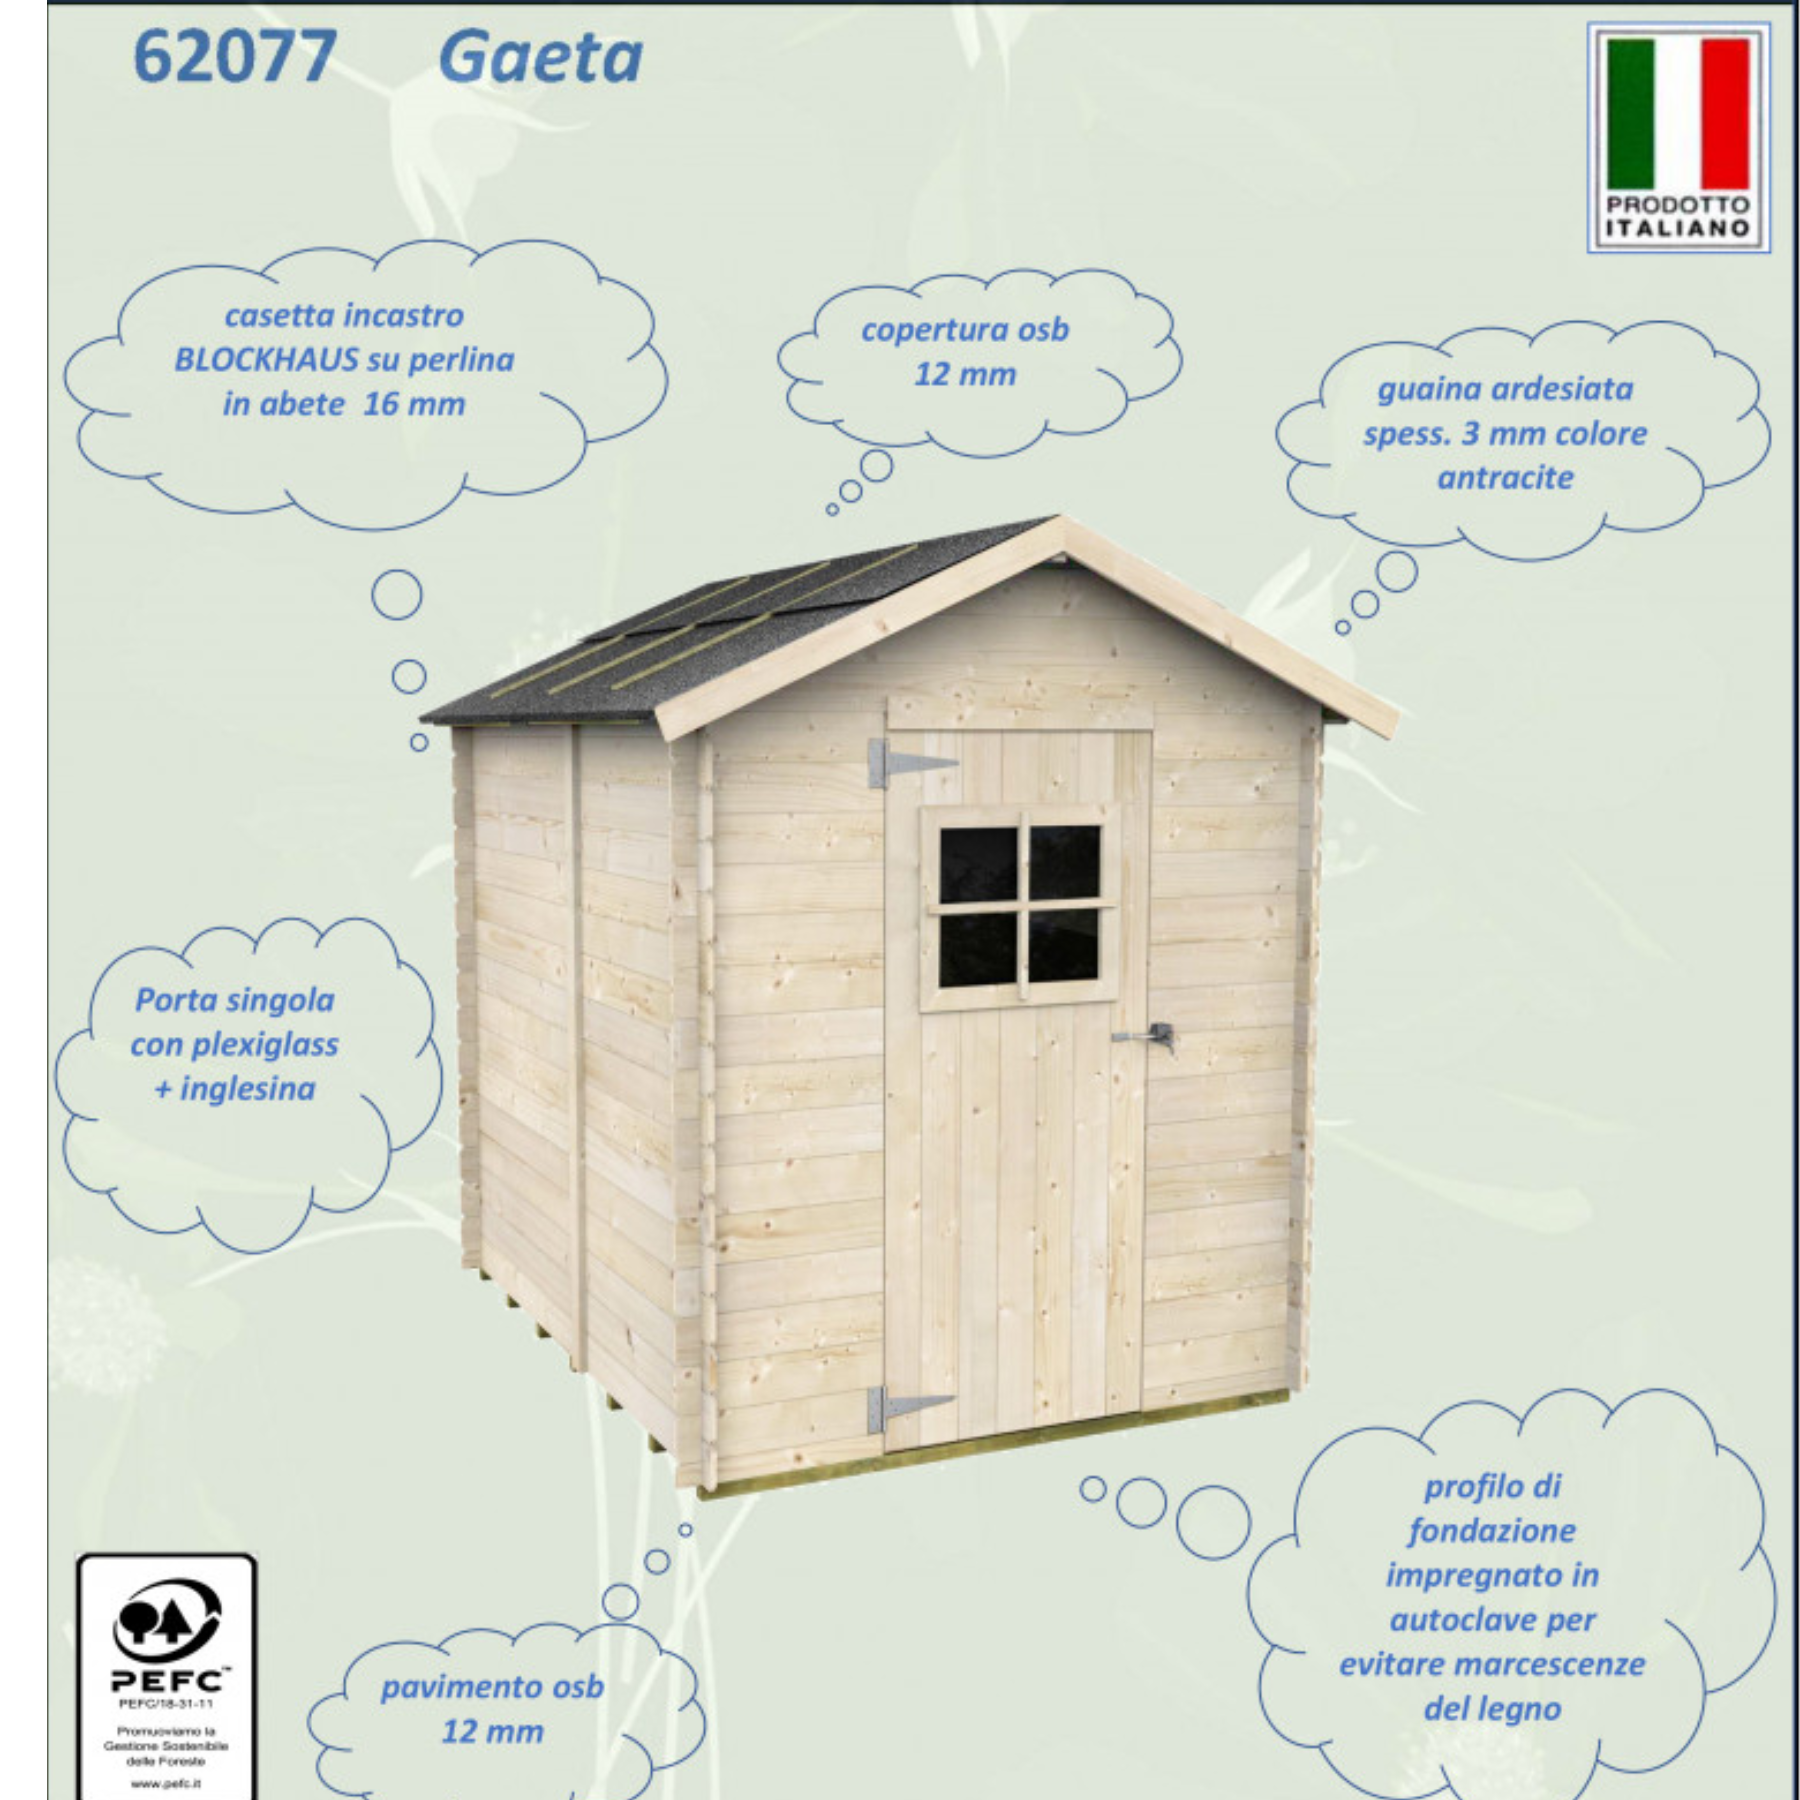 Caseta de jardín de madera "Gaeta" 178x218 cm 205h puerta simple con ventana